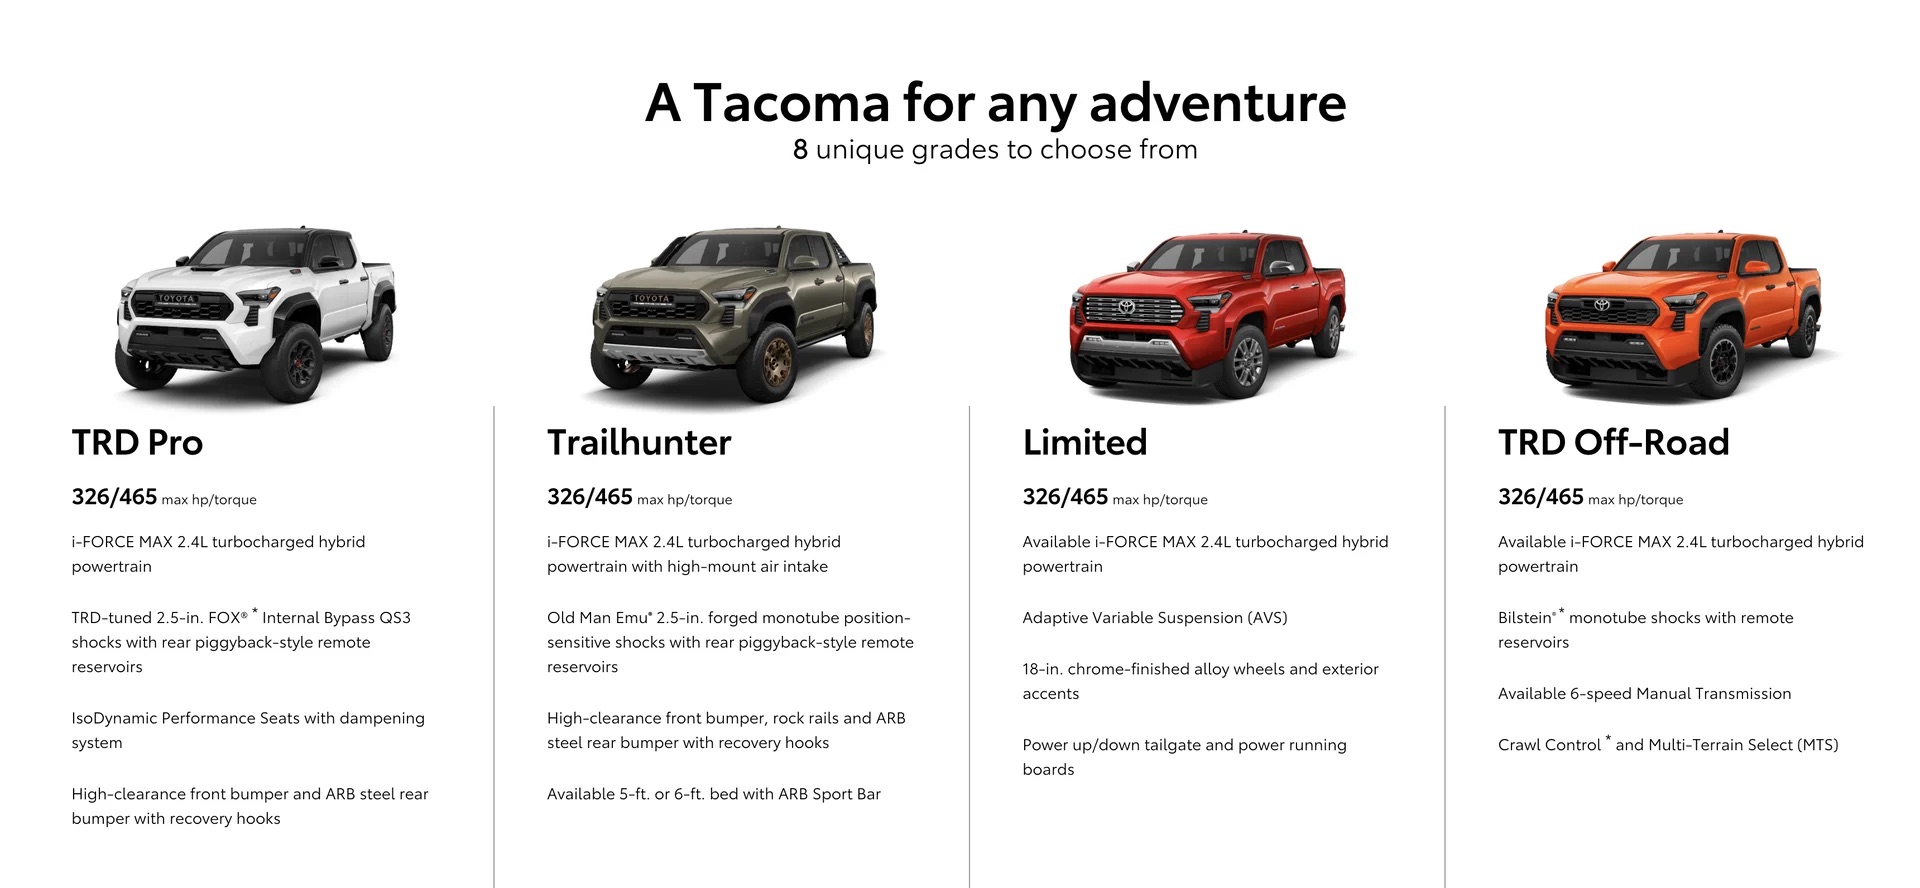 2024 Tacoma Trims/Models Comparison on Toyota Site 2024-tacoma-trims-grades-models-2